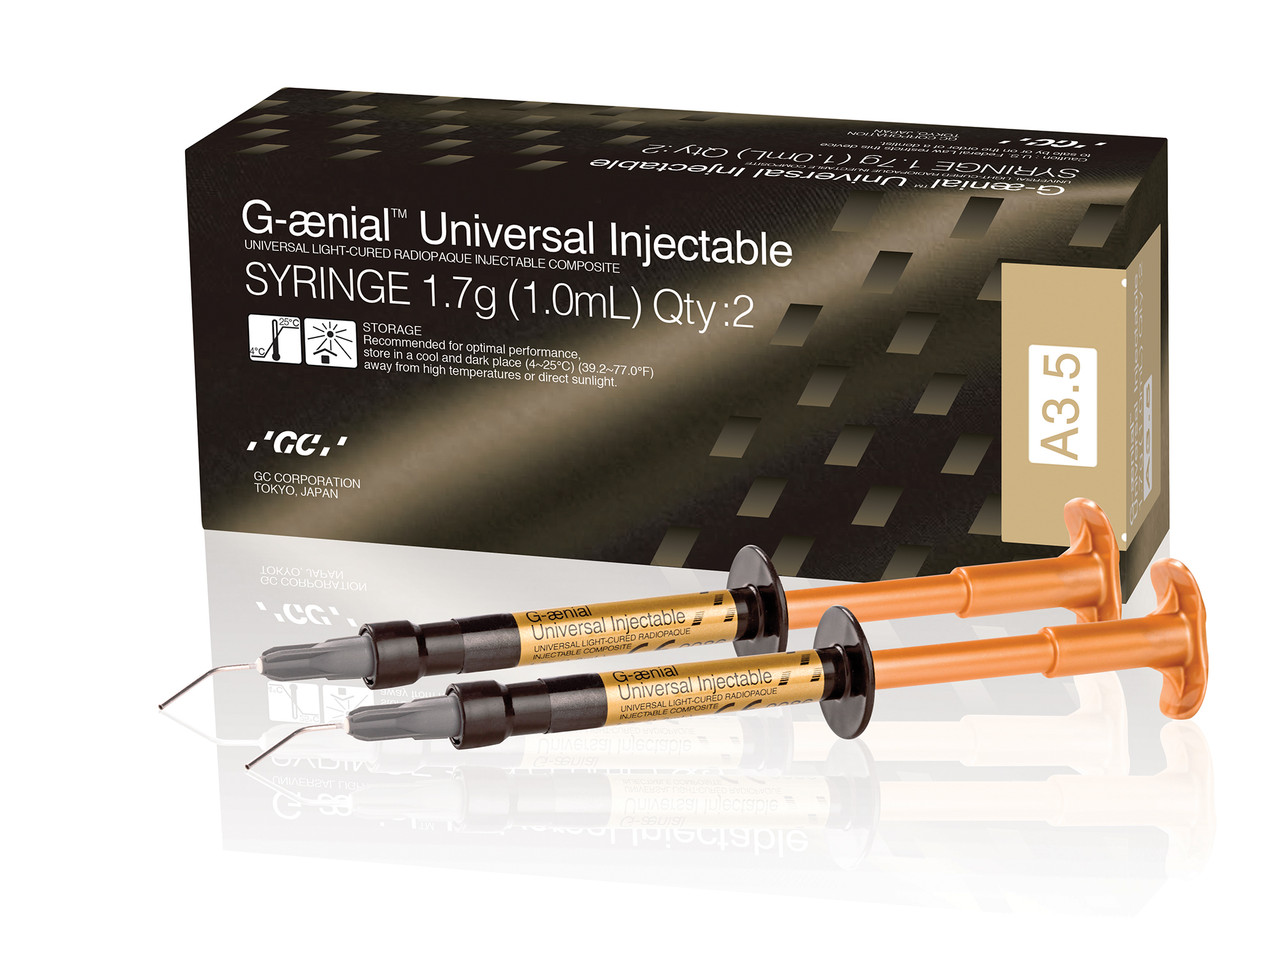 G-aenial Universal Injectable Unitips 15 x 0.16mL B2